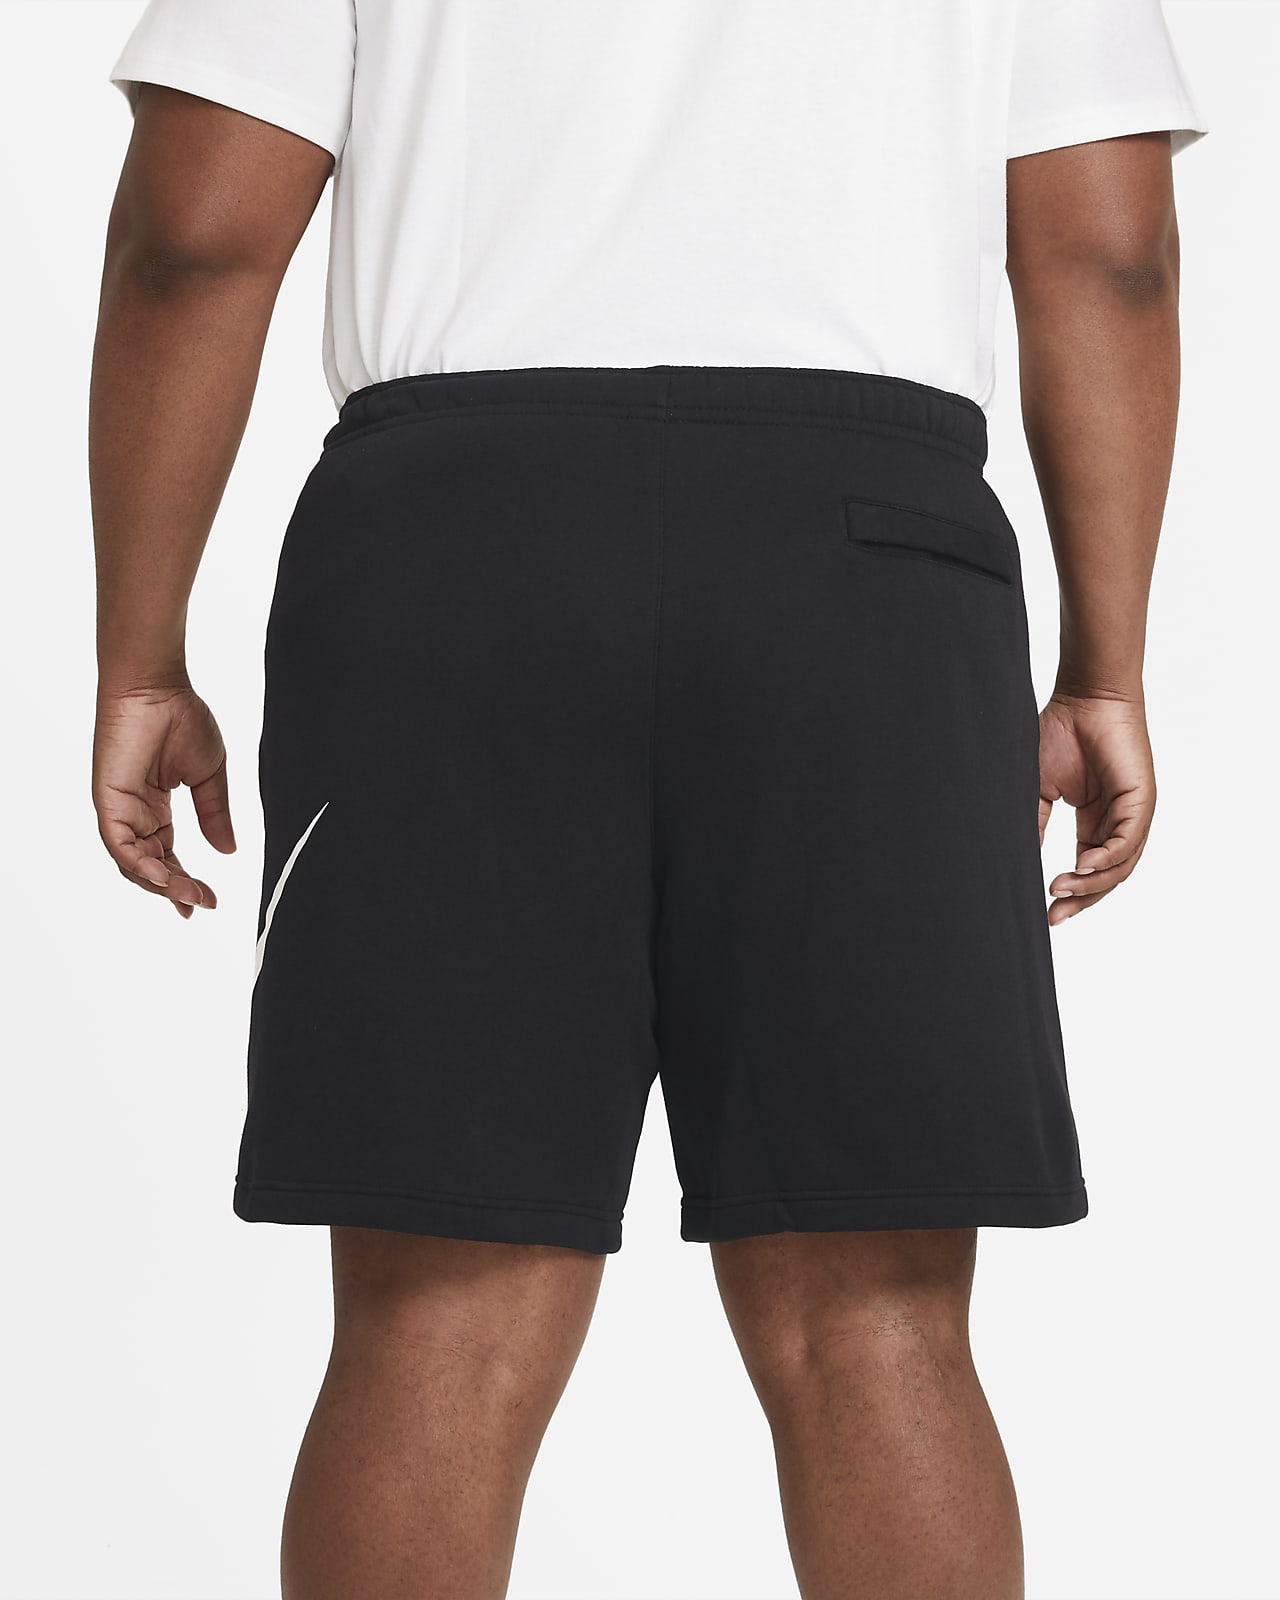 Short de sport flex noir homme - Nike